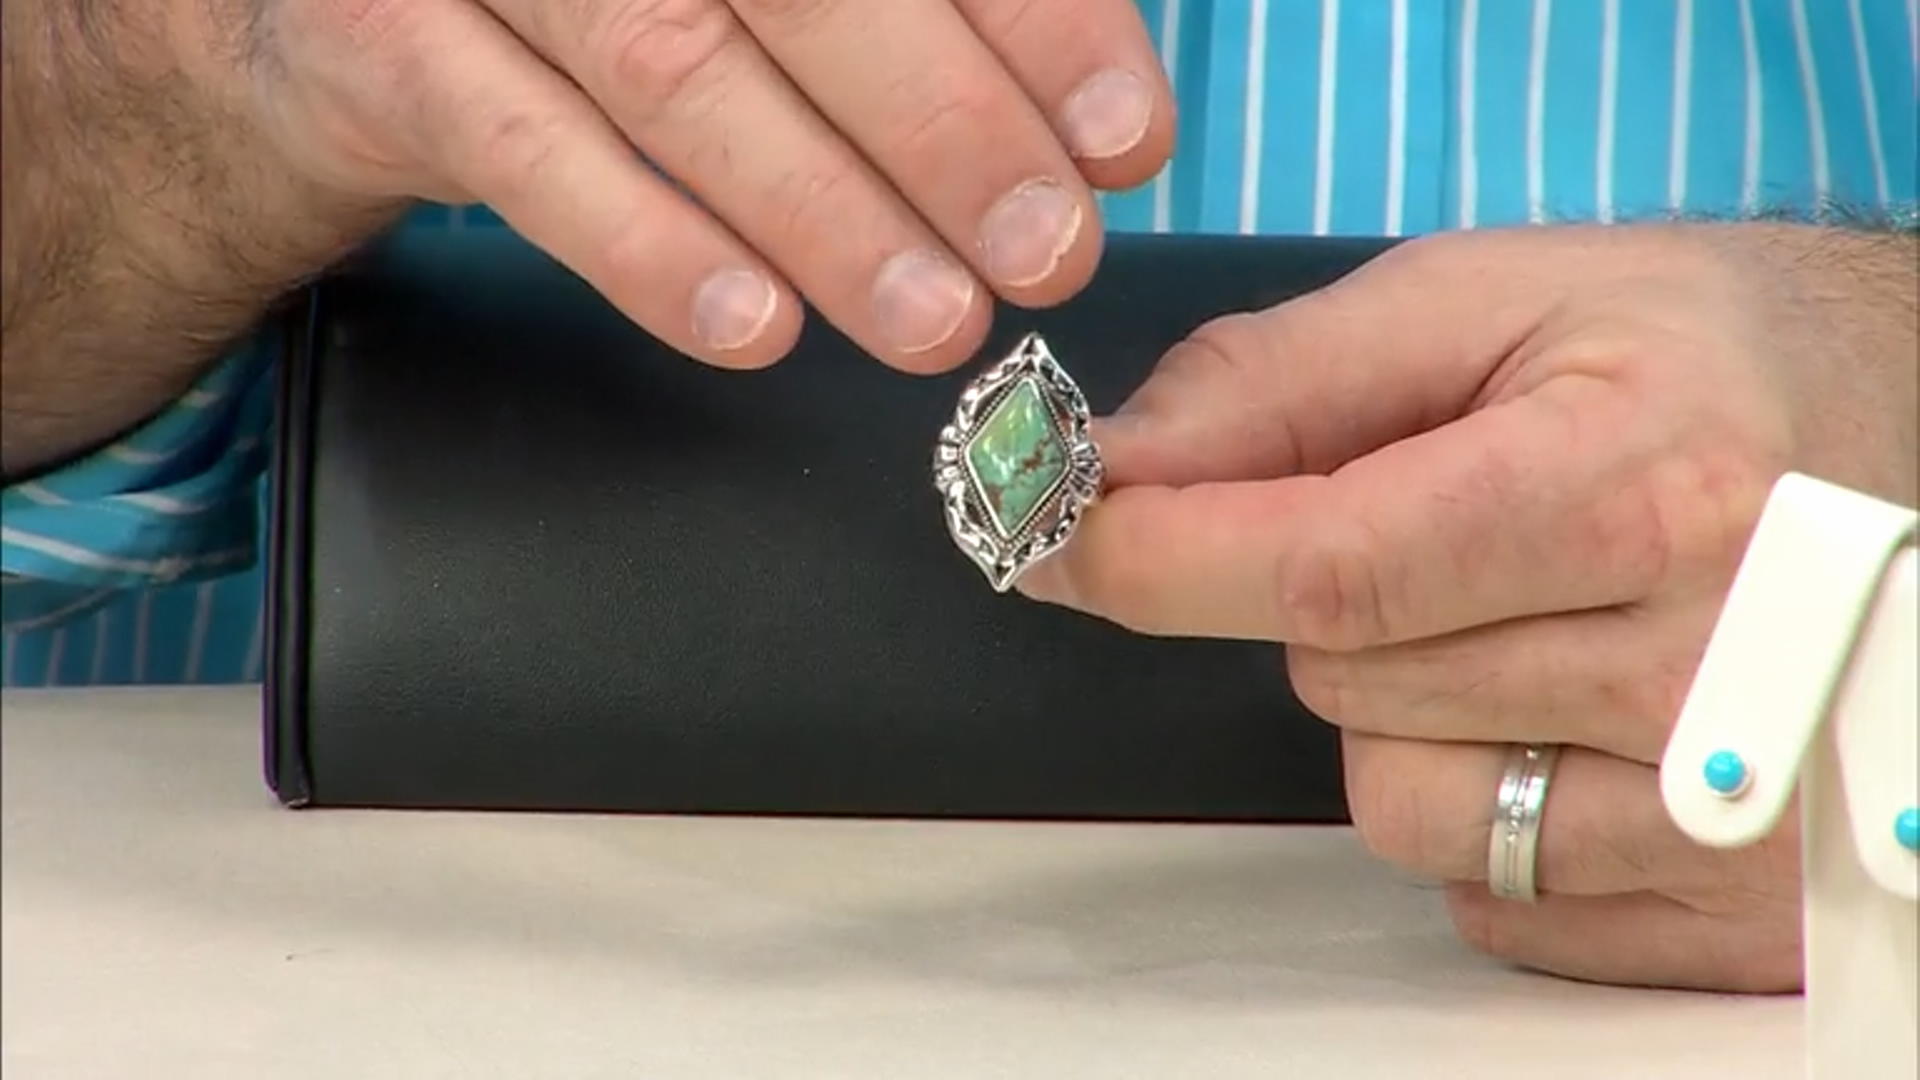 Green Kite Kingman Turquoise Sterling Silver Ring Video Thumbnail